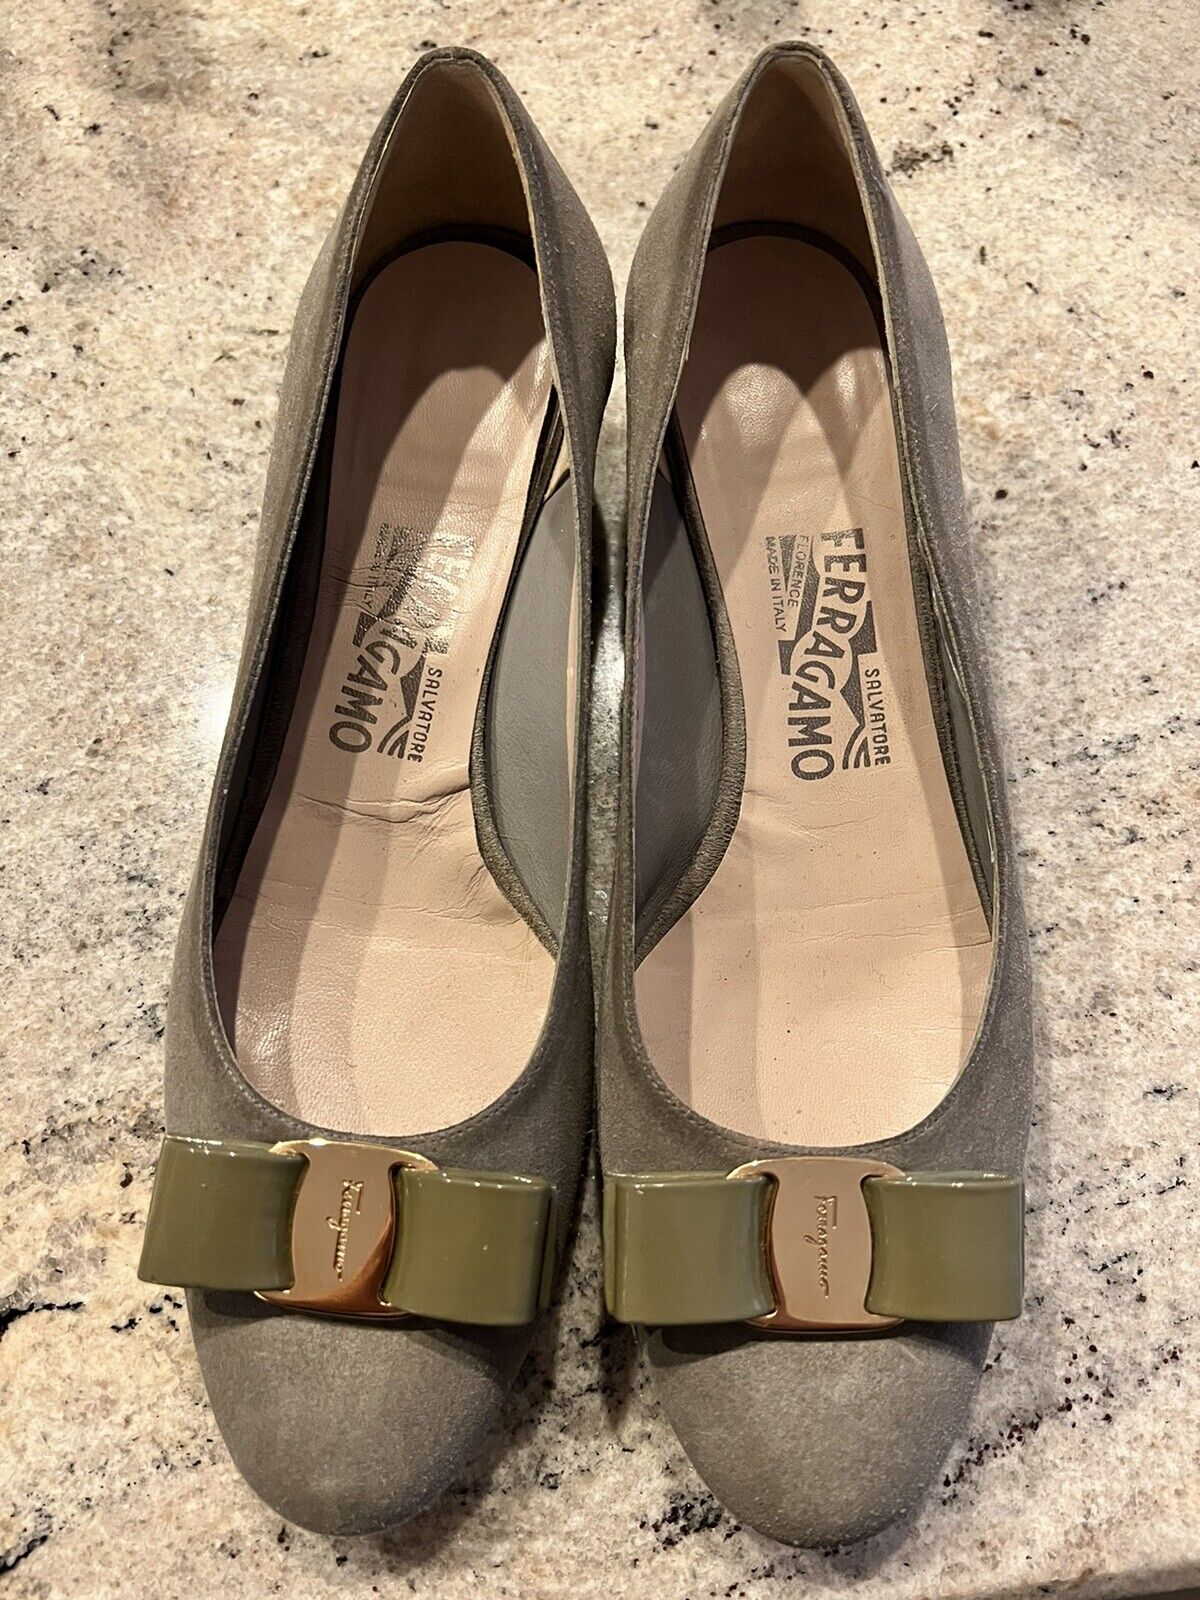 Salvatore Ferragamo Vara Bow Grey Suede Patent Block Heel Shoes 9 B